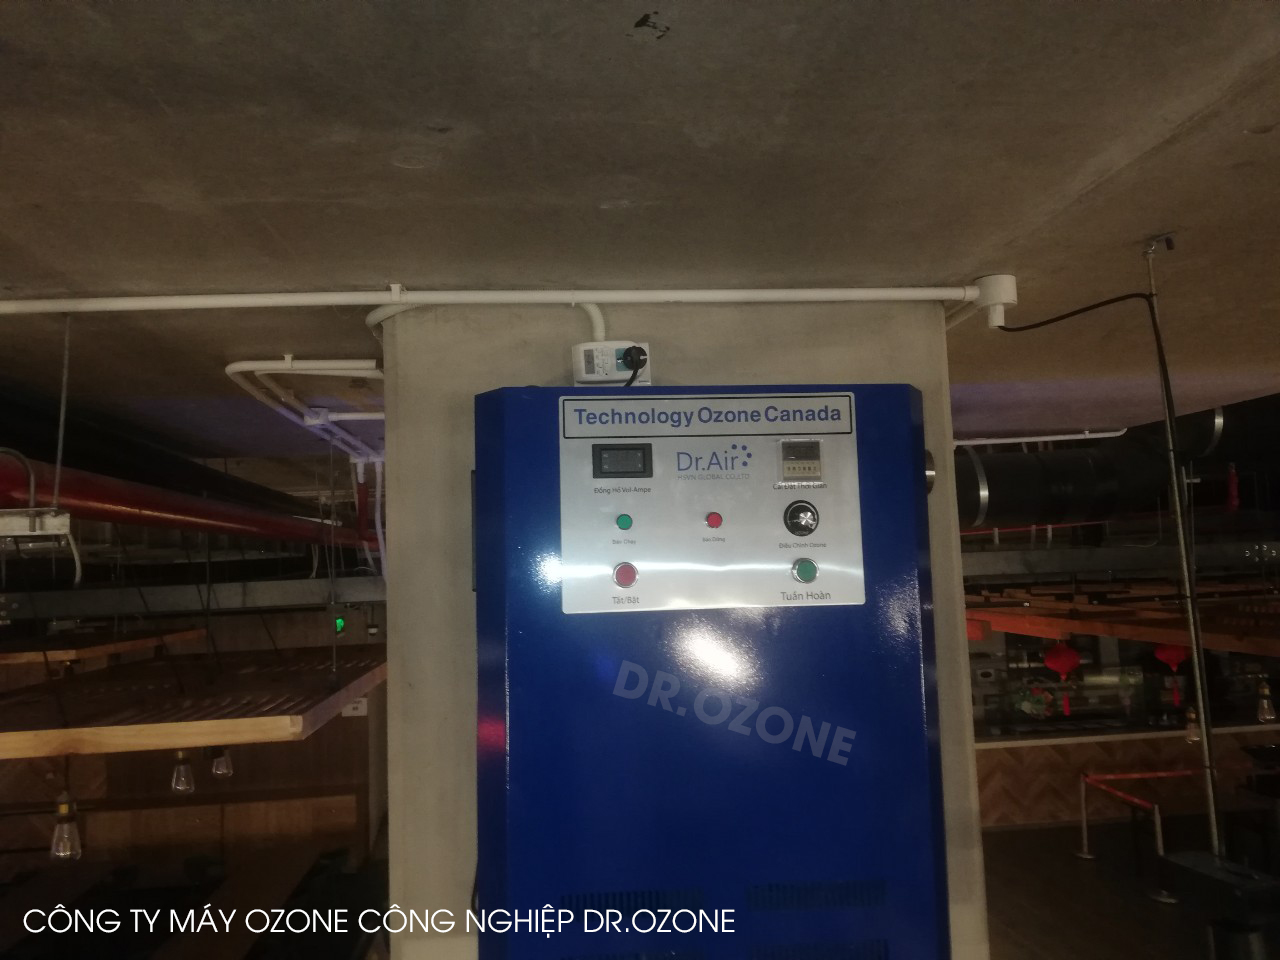 may ozone cong nghiep drozone dk 20 khu mui cangtin